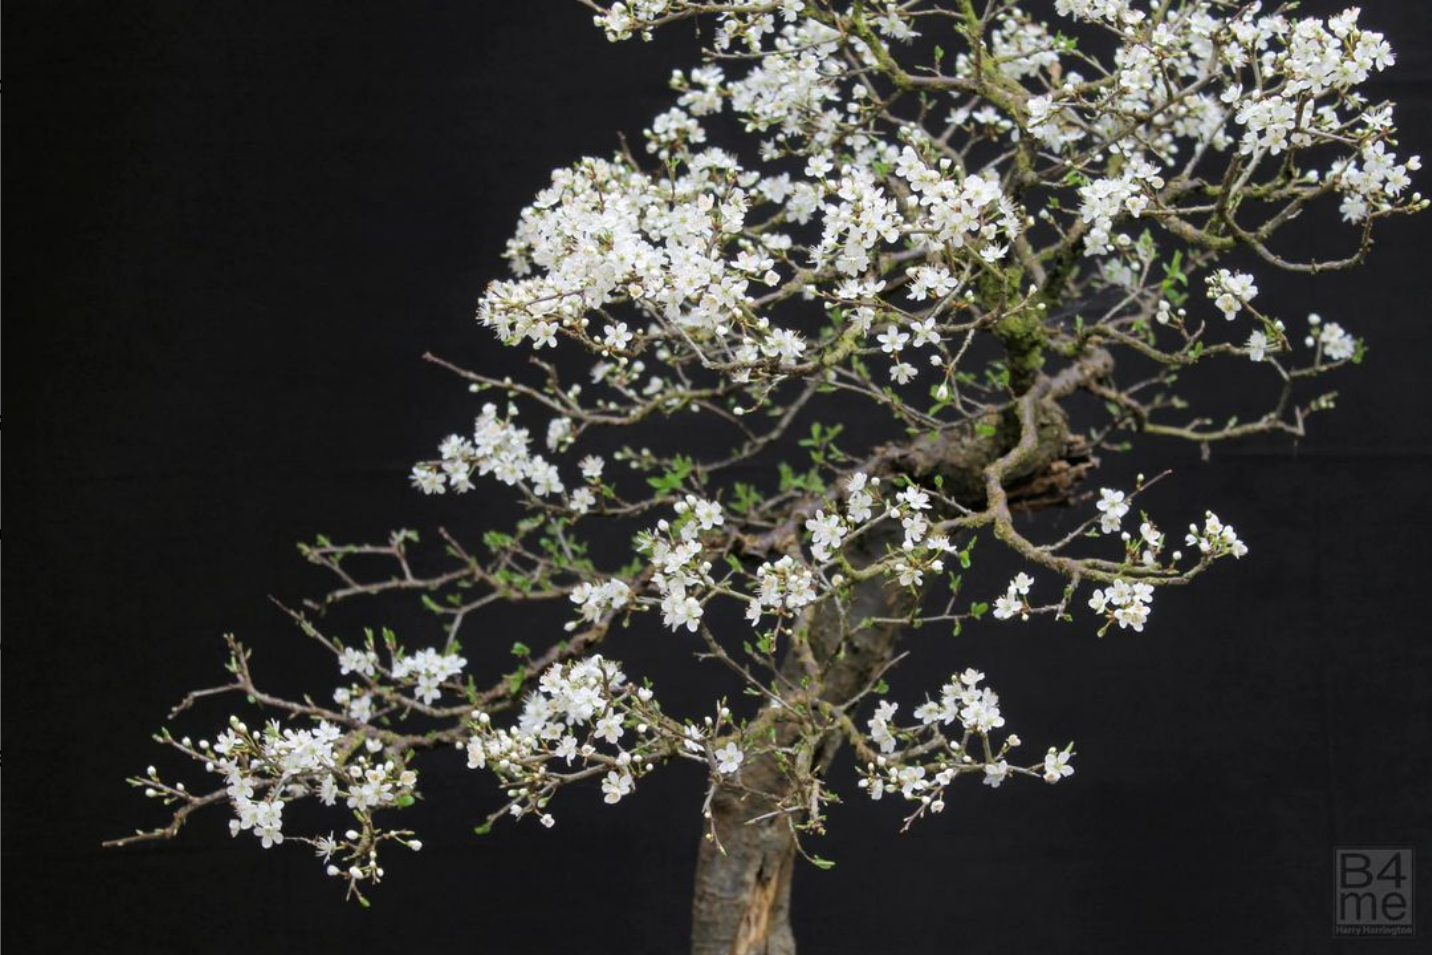 Detail of the flowers on my Prunus spinosa/Blackthorn bonsai